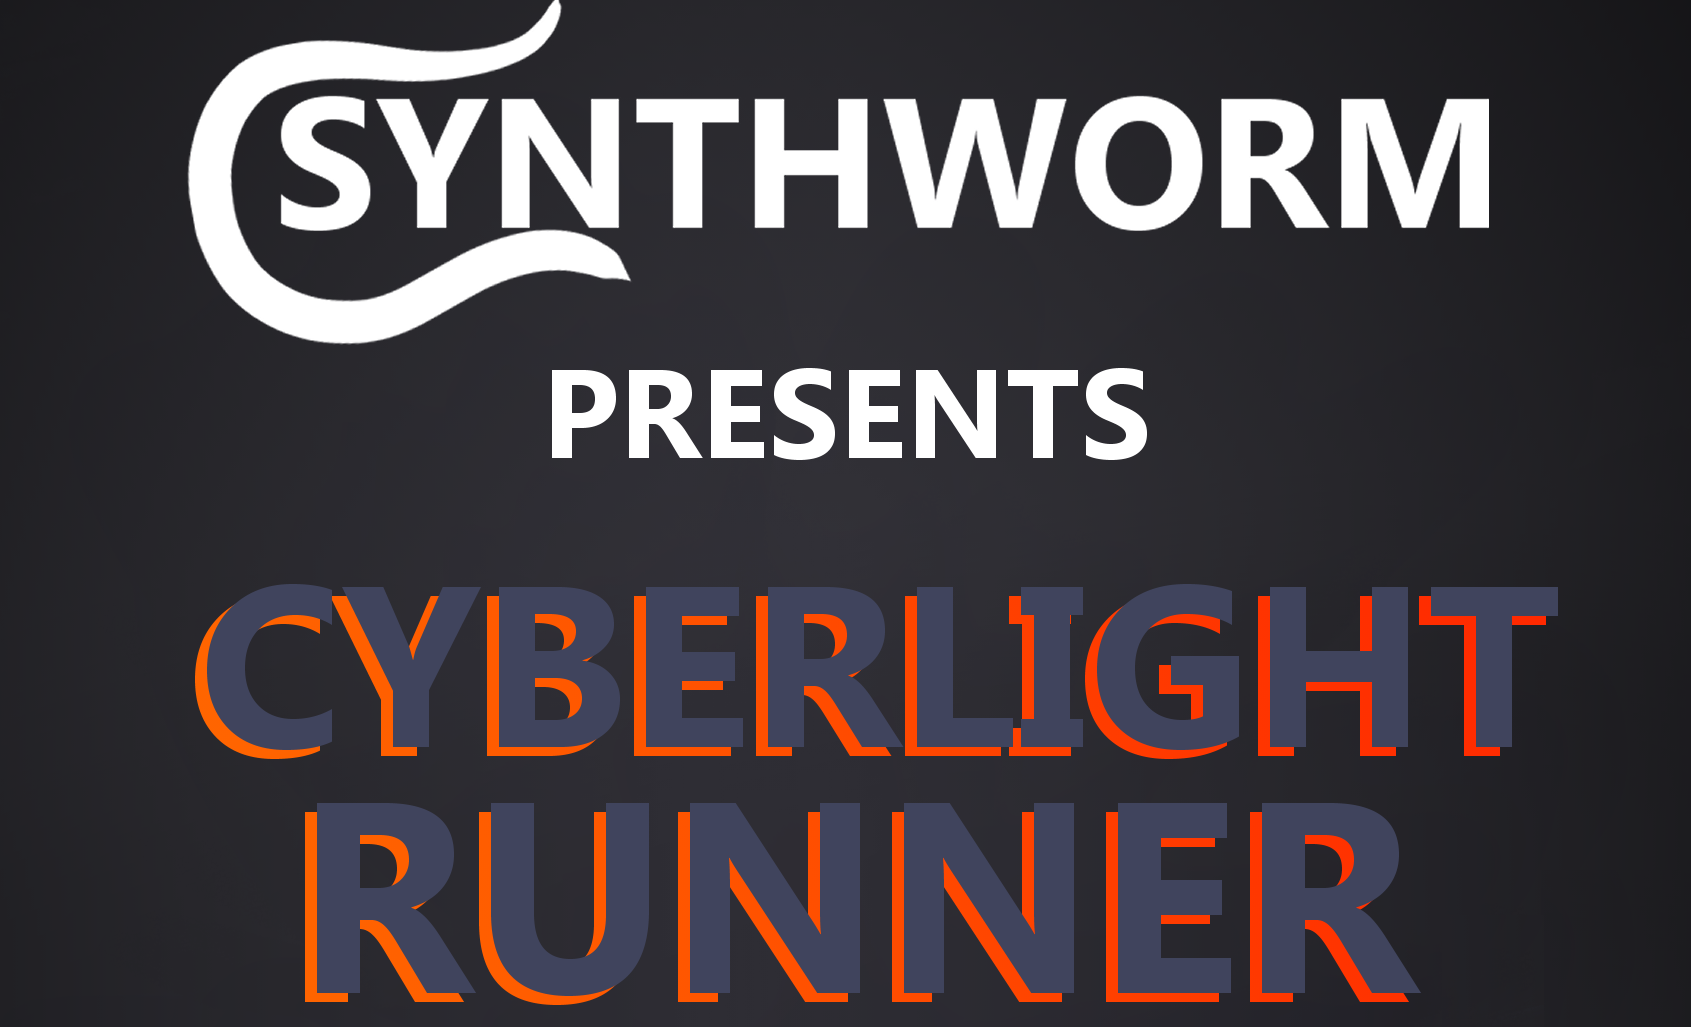 Cyberlight Runner